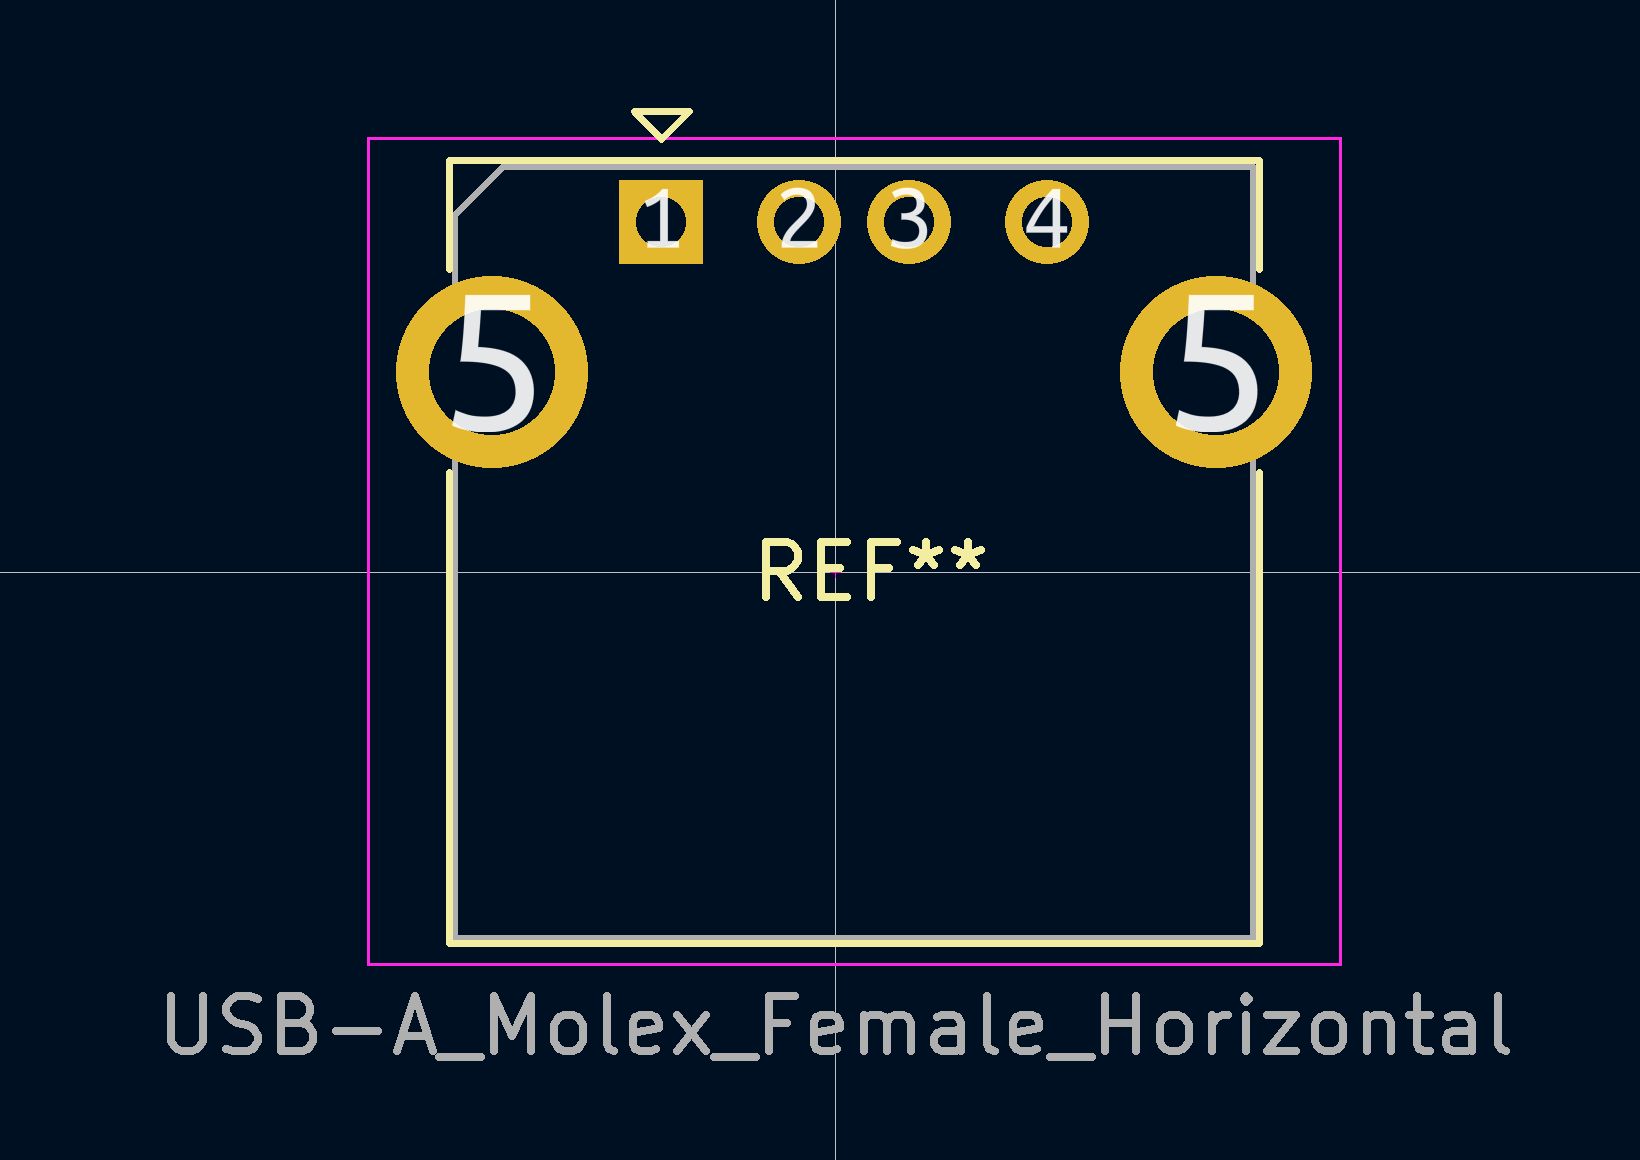 Connector_USB-A_Molex_Female_Horizontal 03